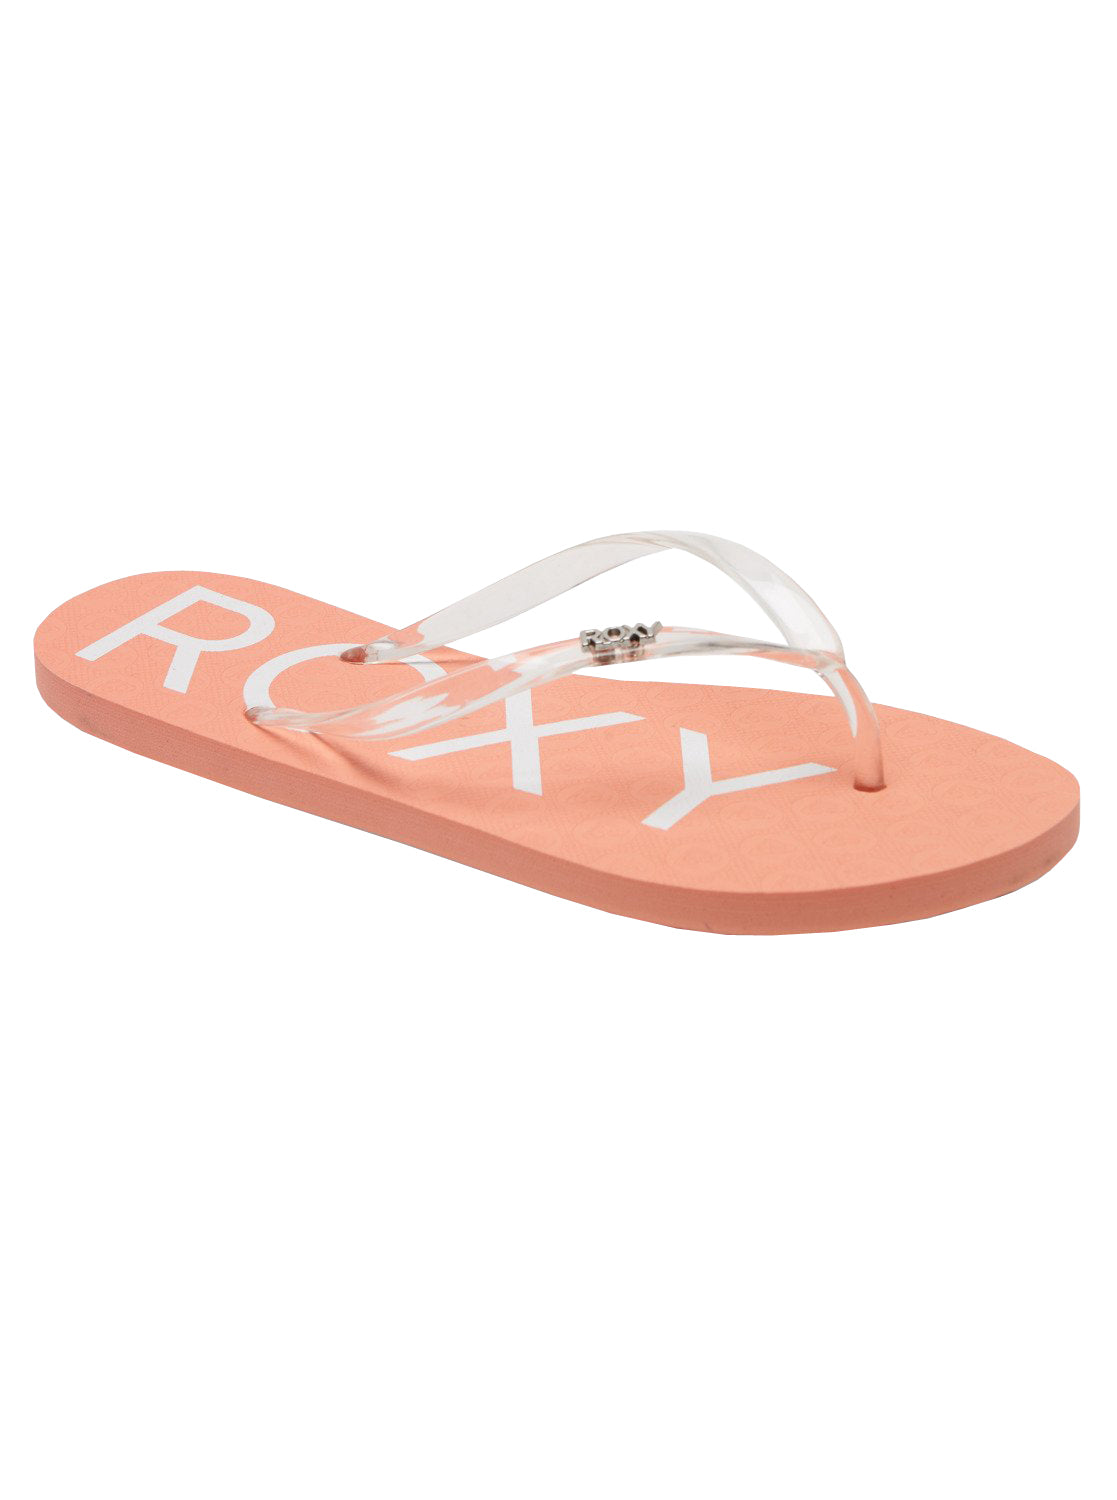 Roxy Viva Jelly Womens Sandal HCO-Hot Coral 8